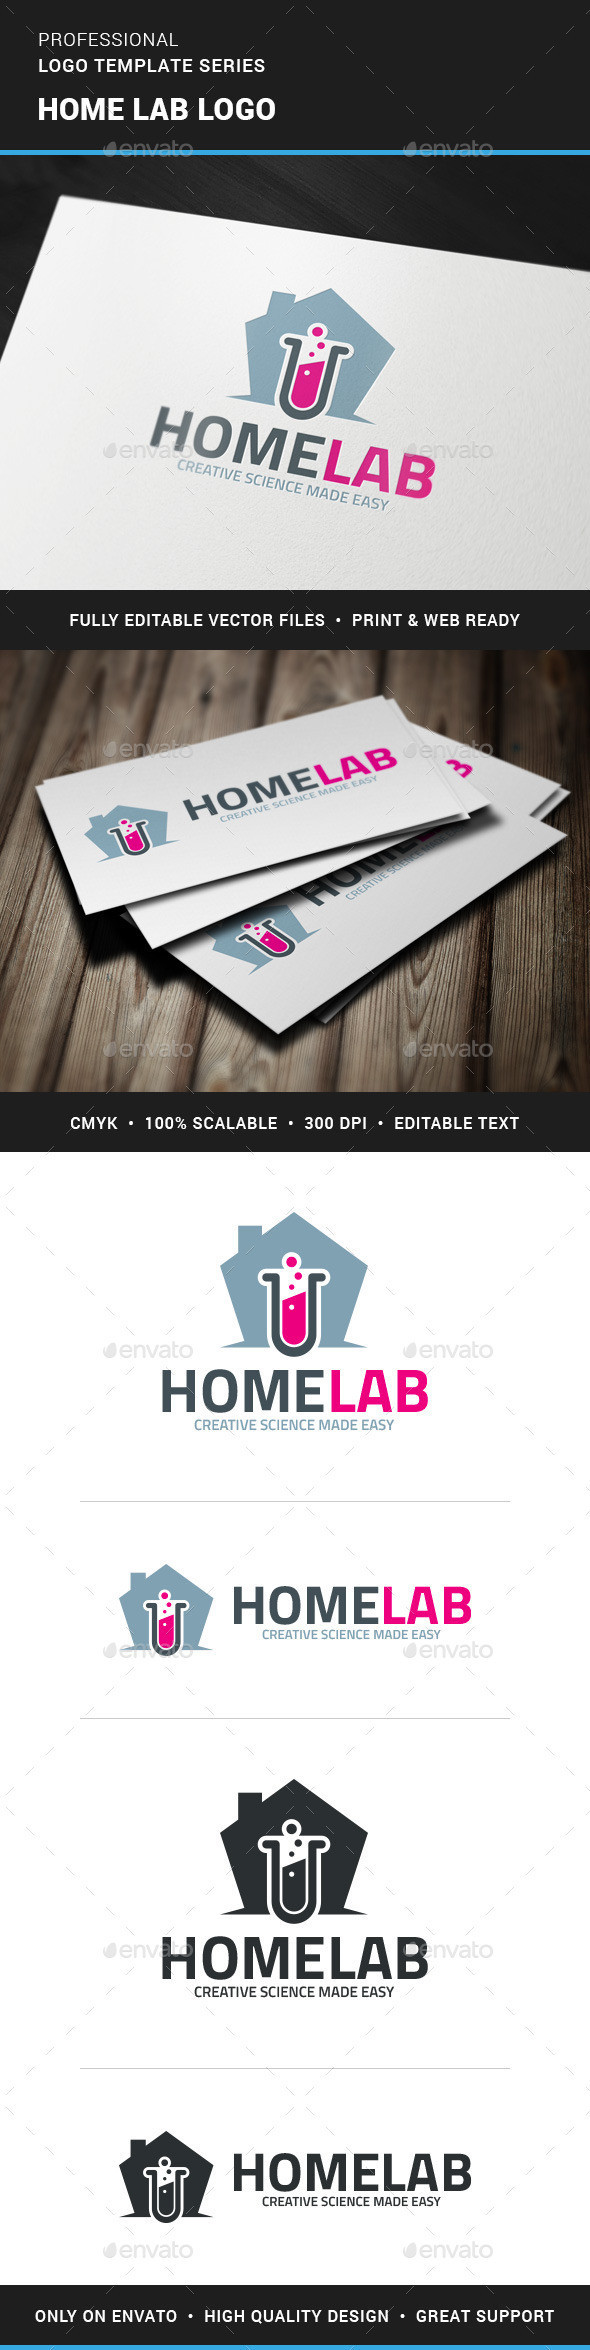 Home lab logo template